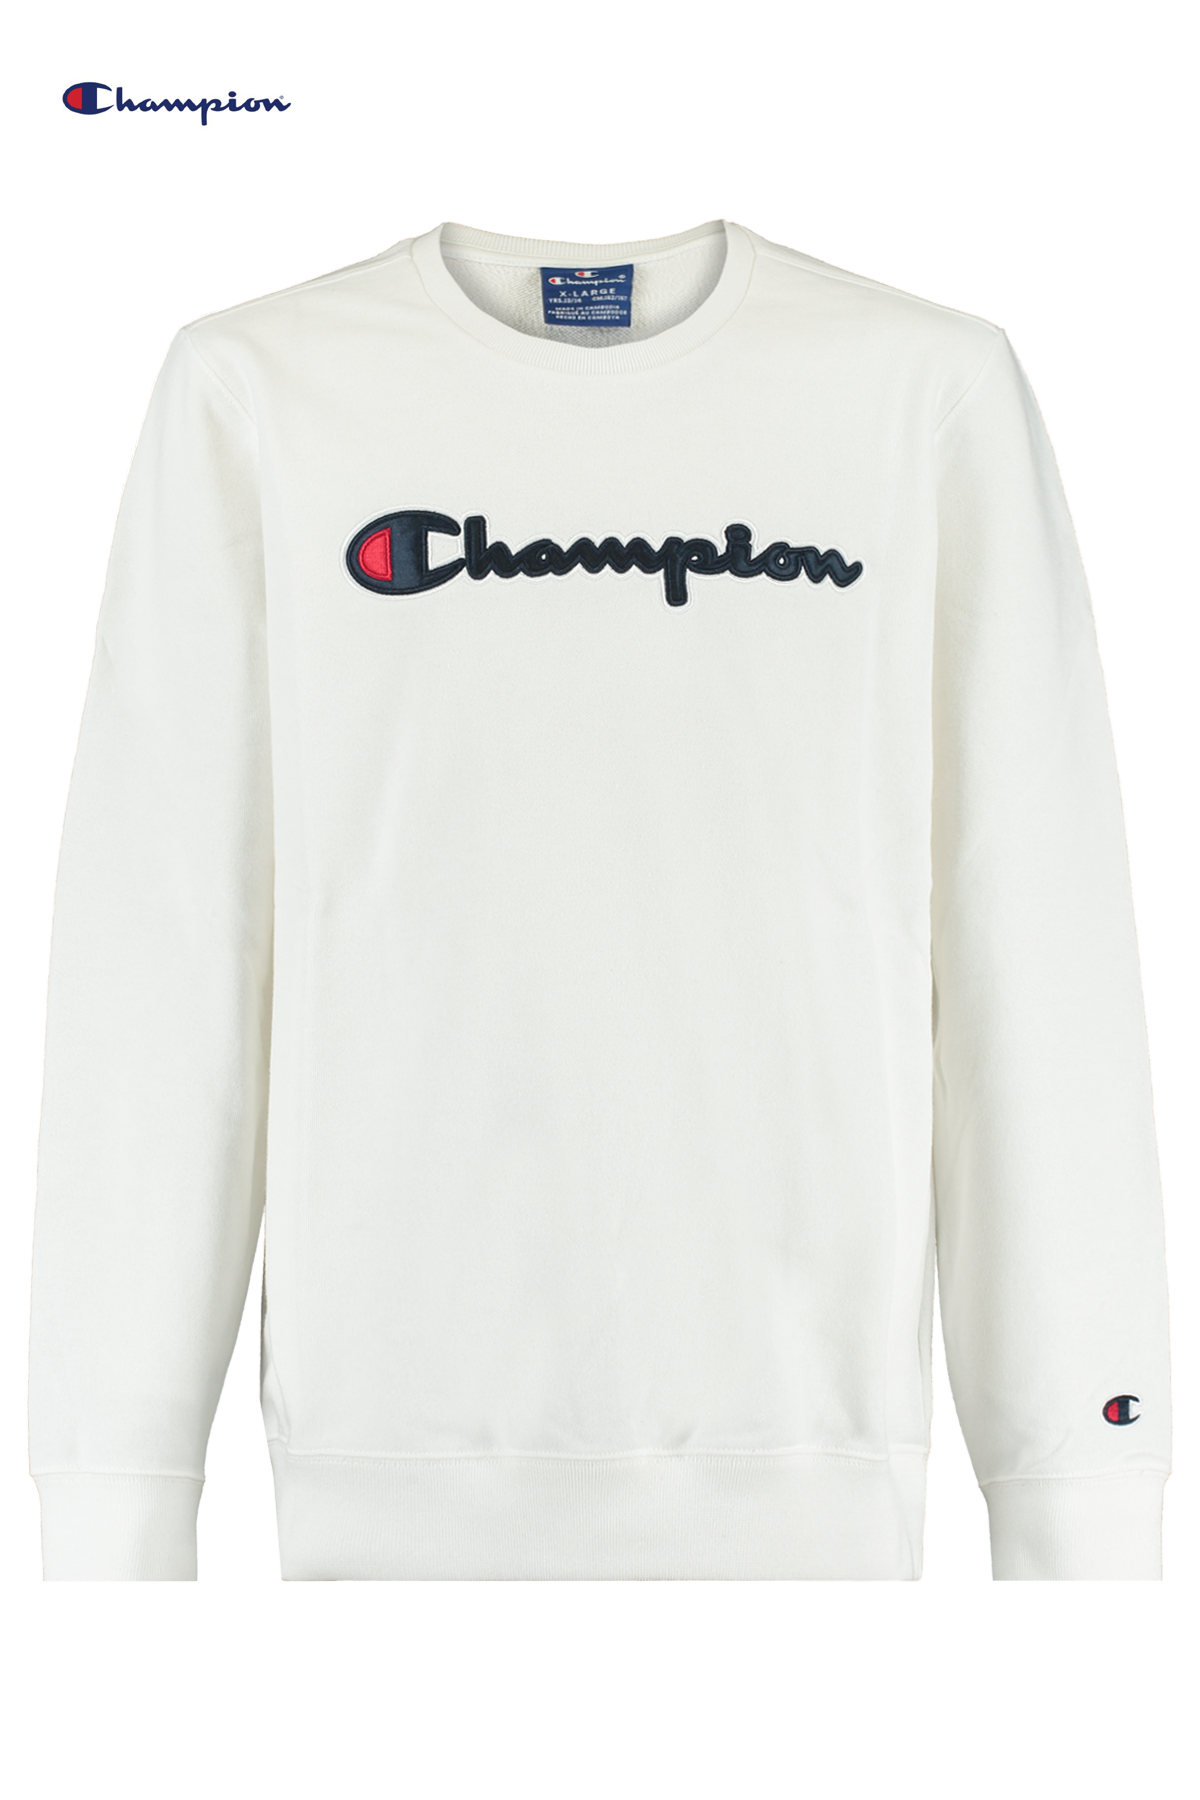 Champion Trui Store, GET 58% OFF, sportsregras.com